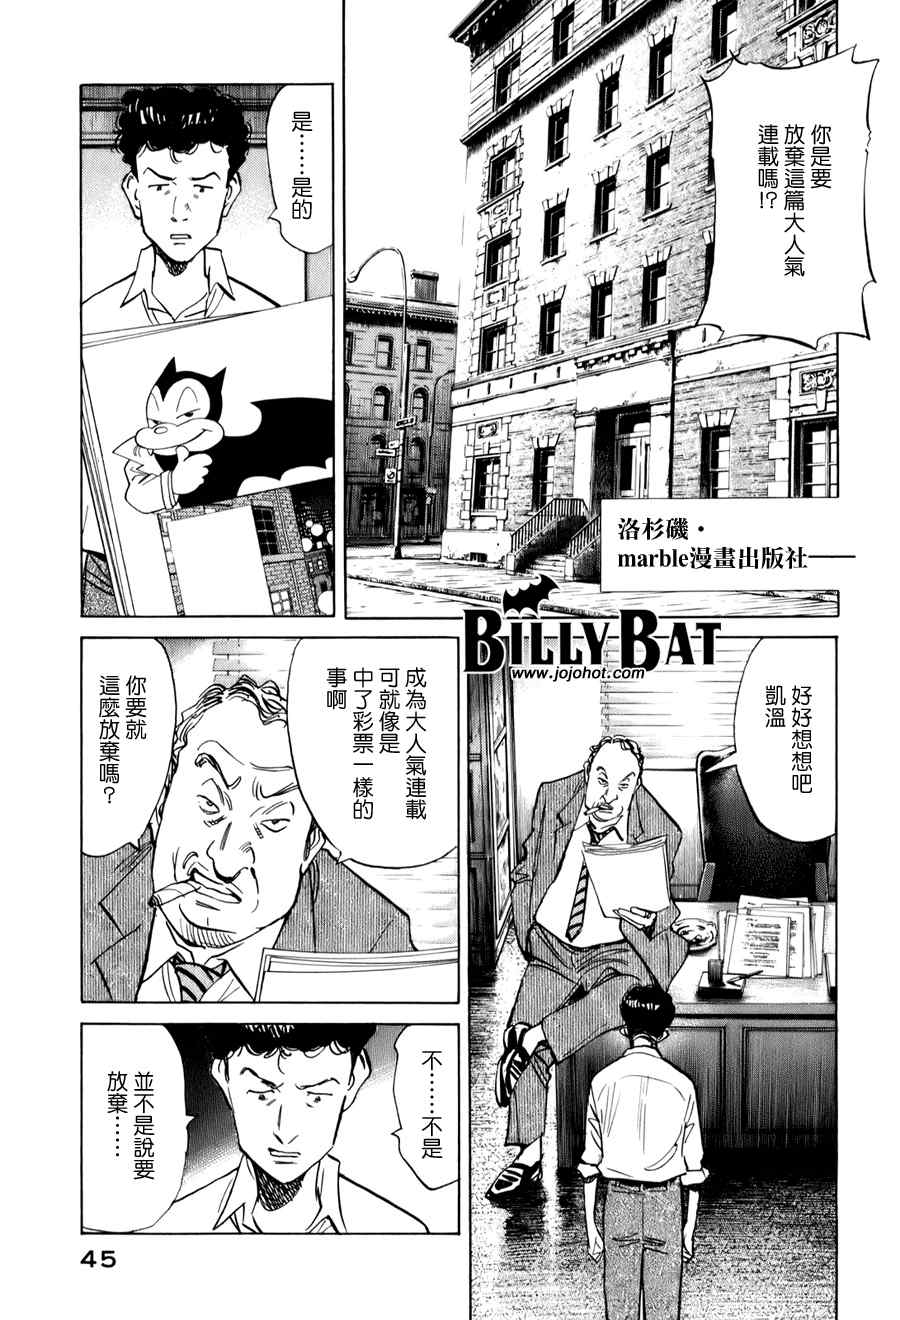 Billy_Bat - 第3話 - 1